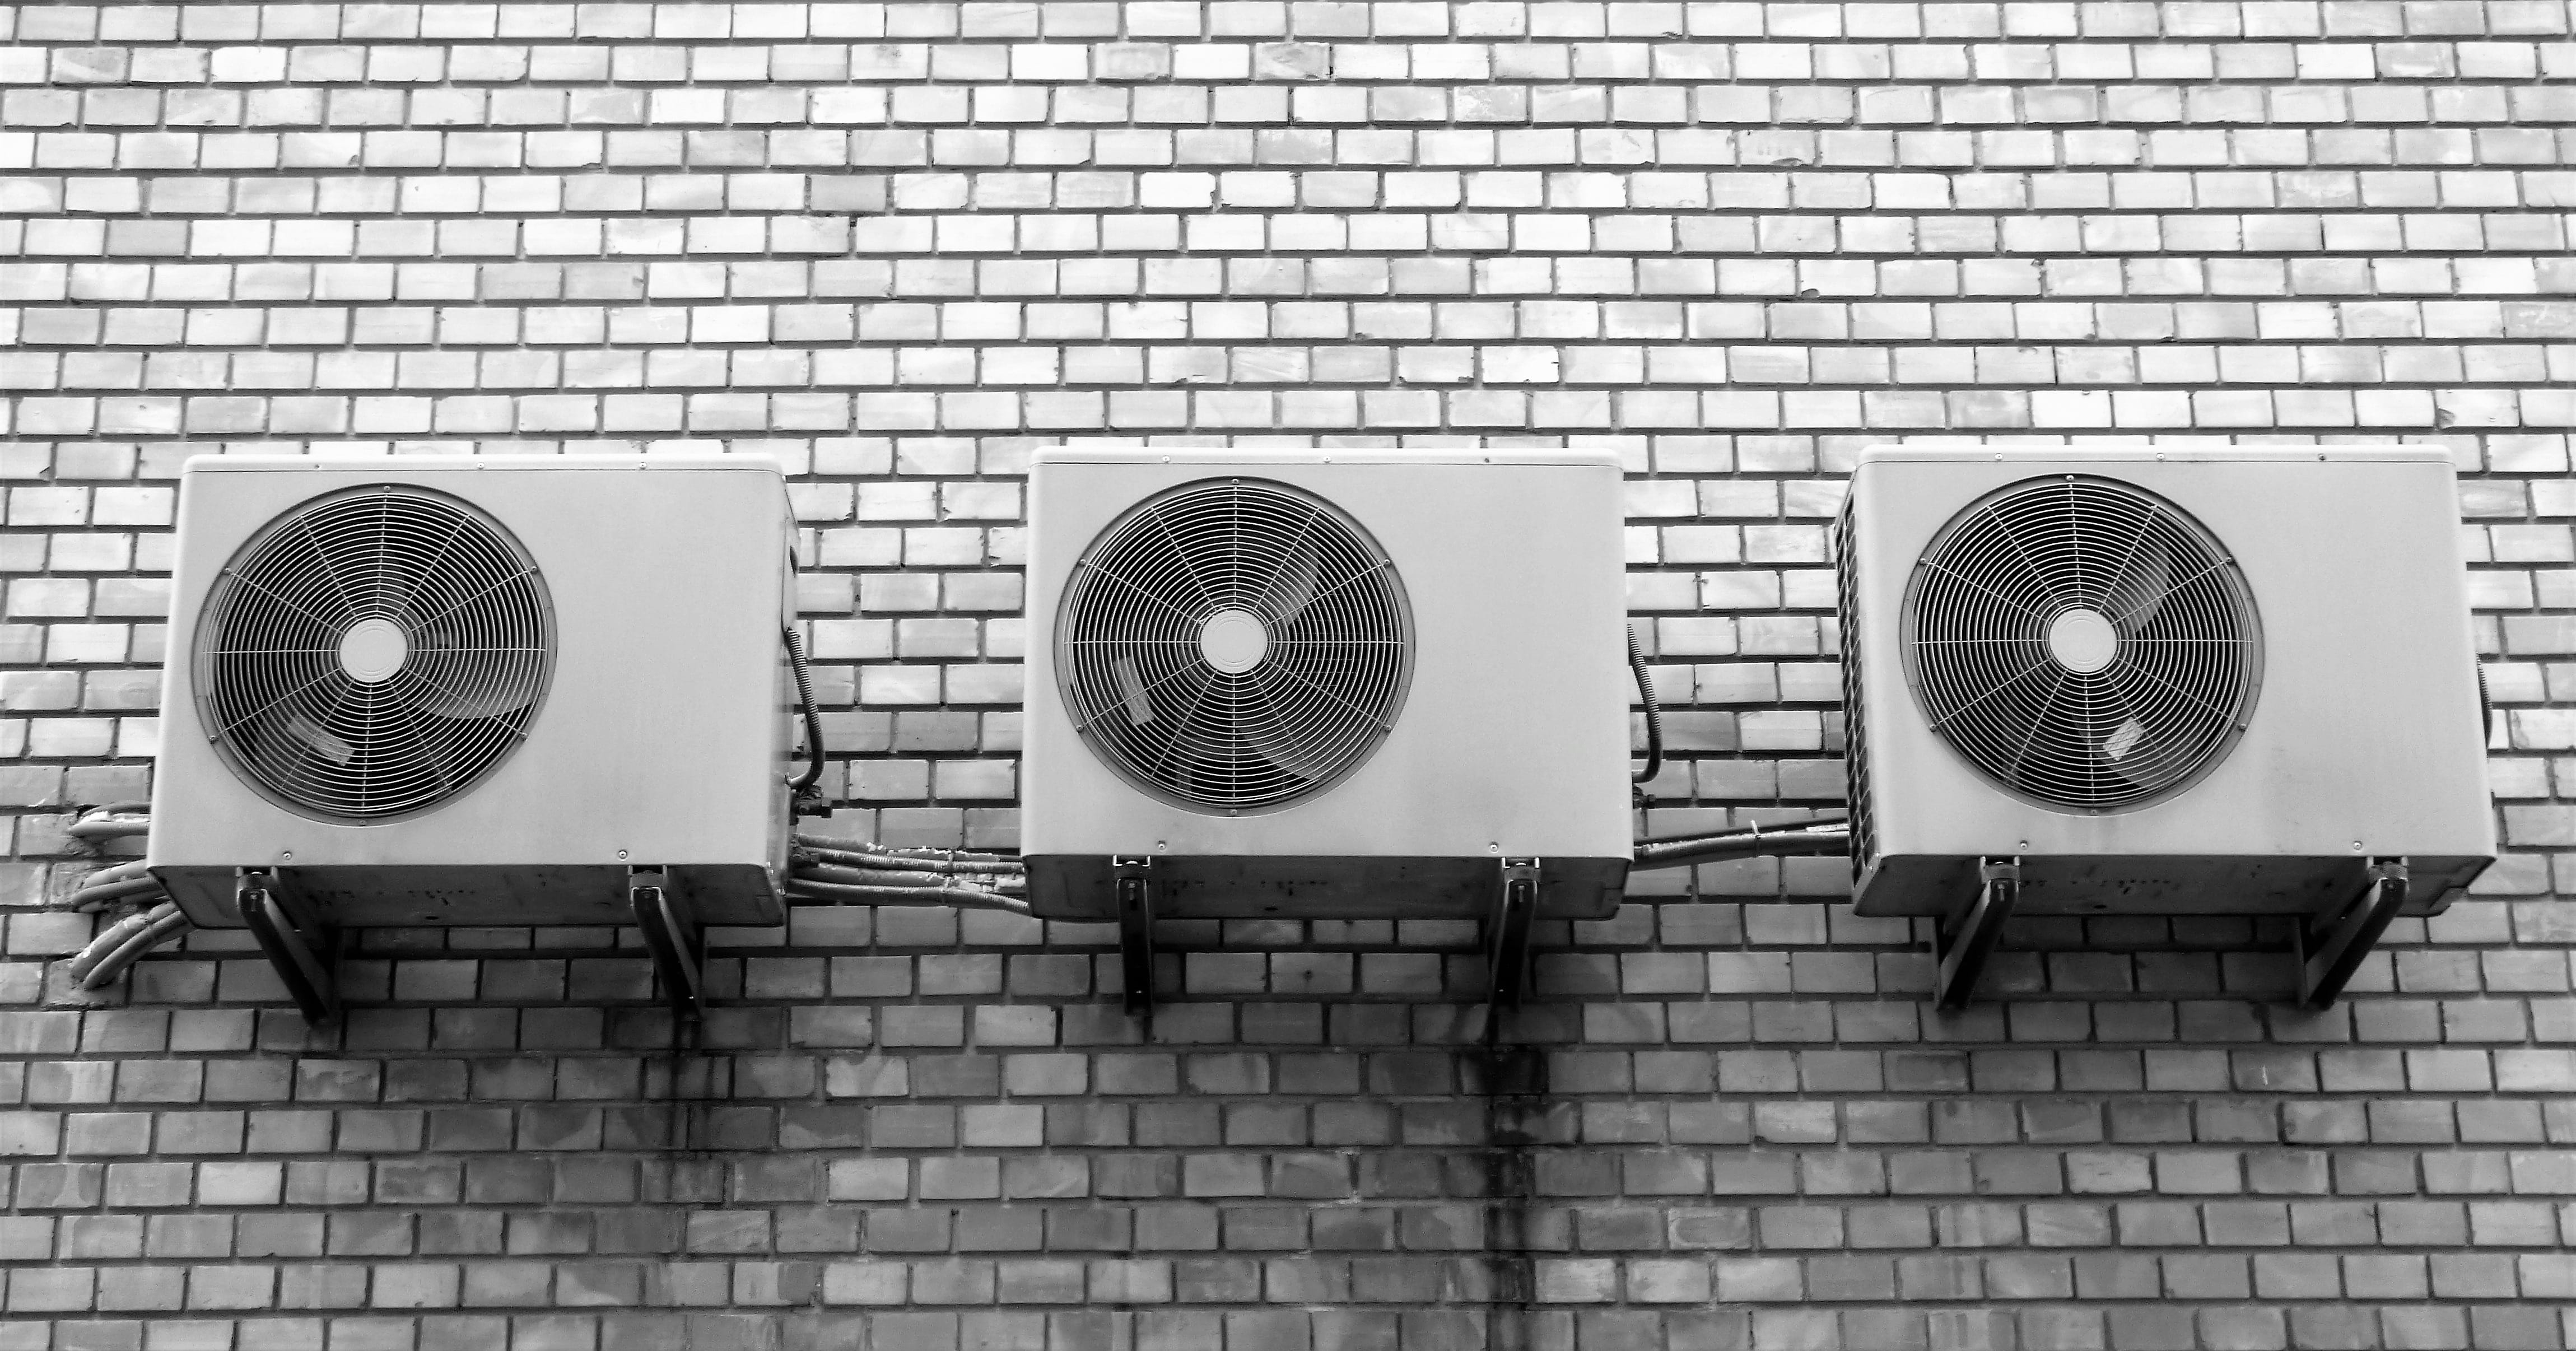 wall-fan-air-conditioning-box-a706d7c112d81caf0417eb8a386208a5